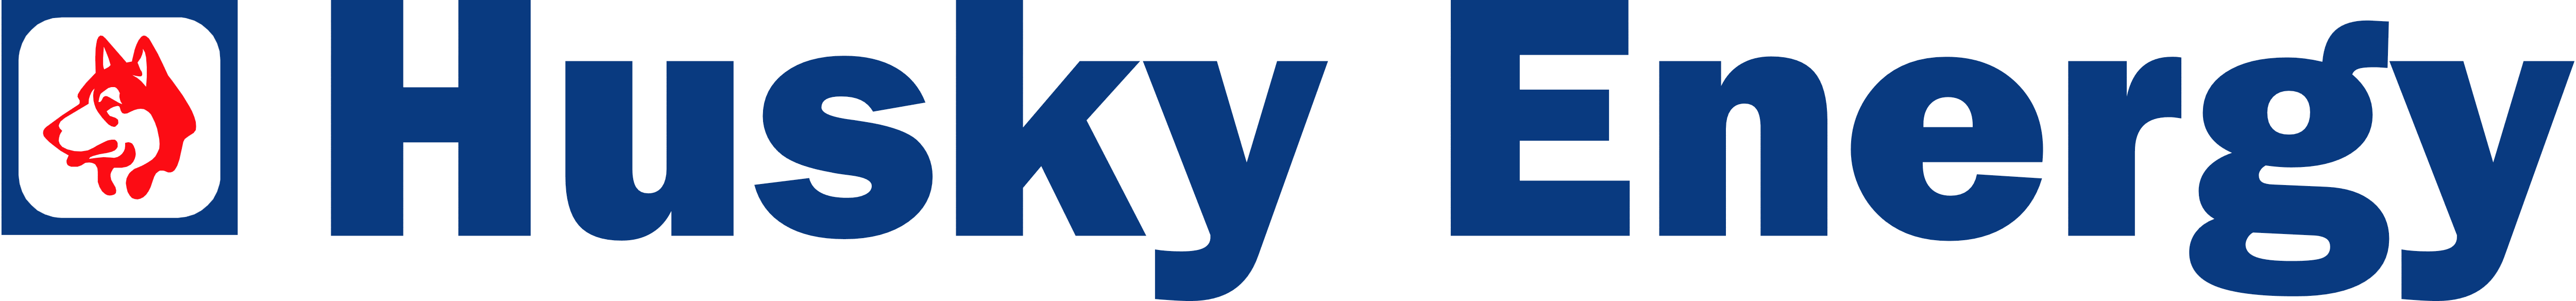 Husky Energy Logo Vector PNG - 105375